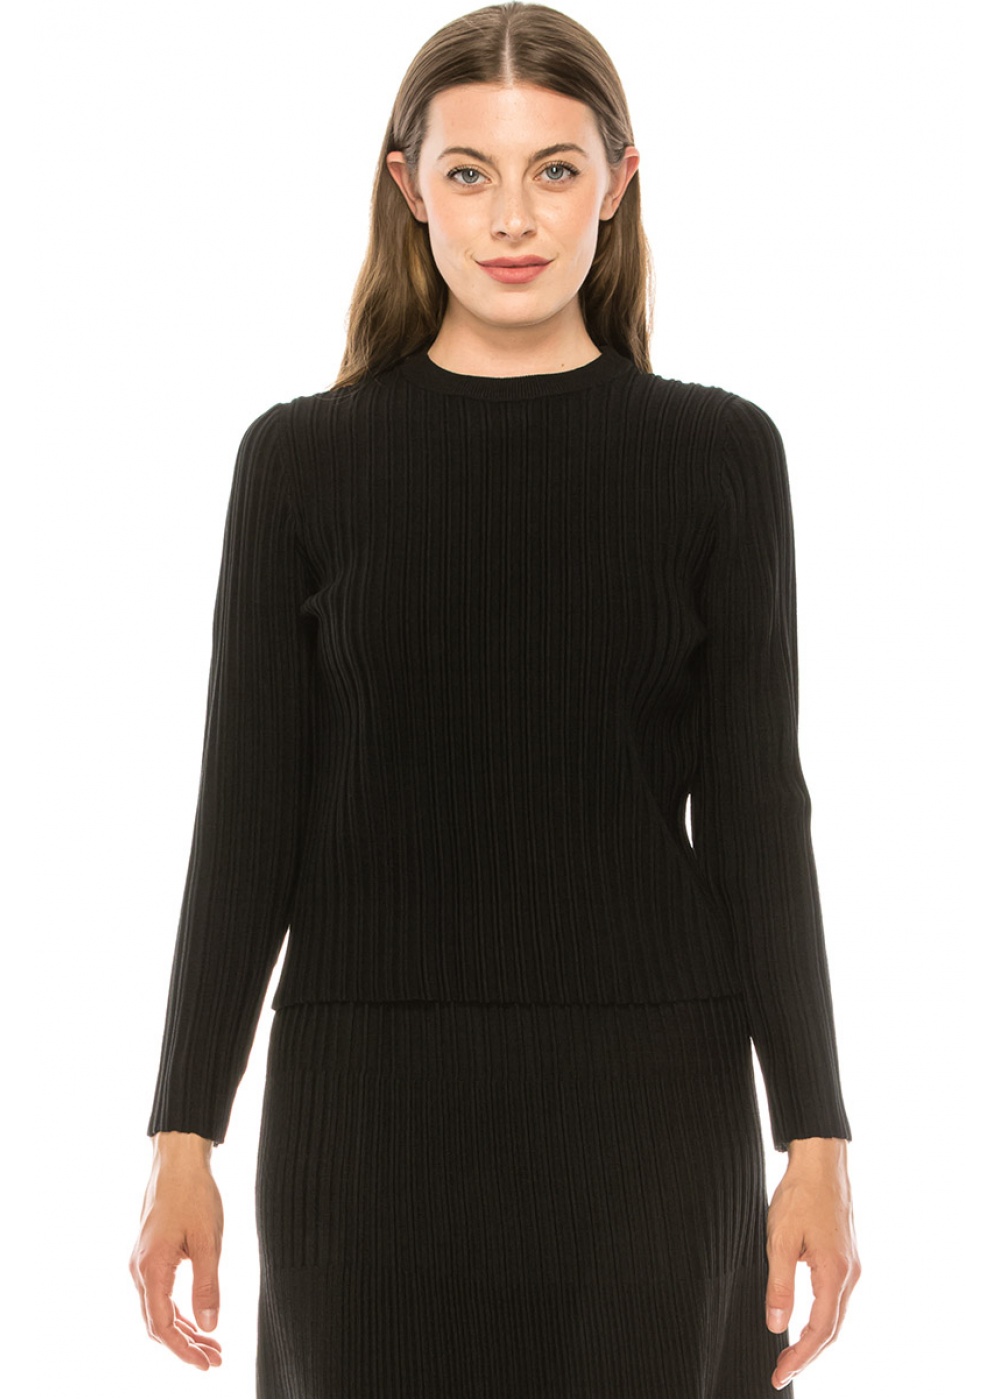 Ribbed Puff Sleeve Sweater - Black